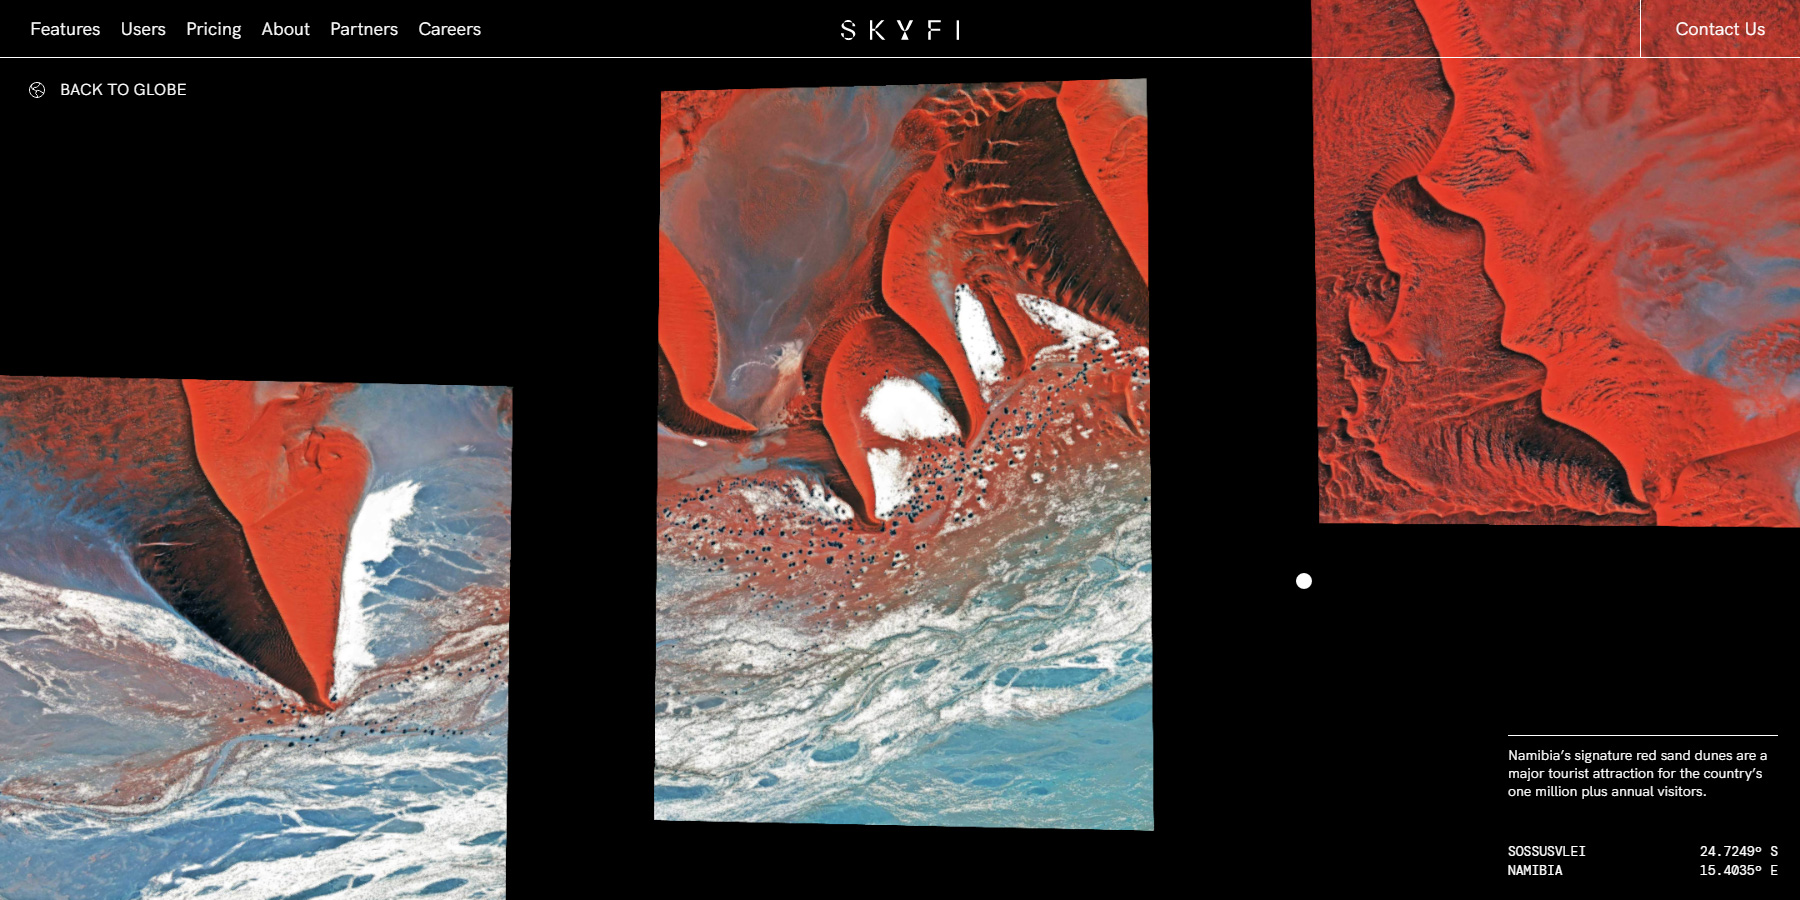 SkyFi - Website of the Day